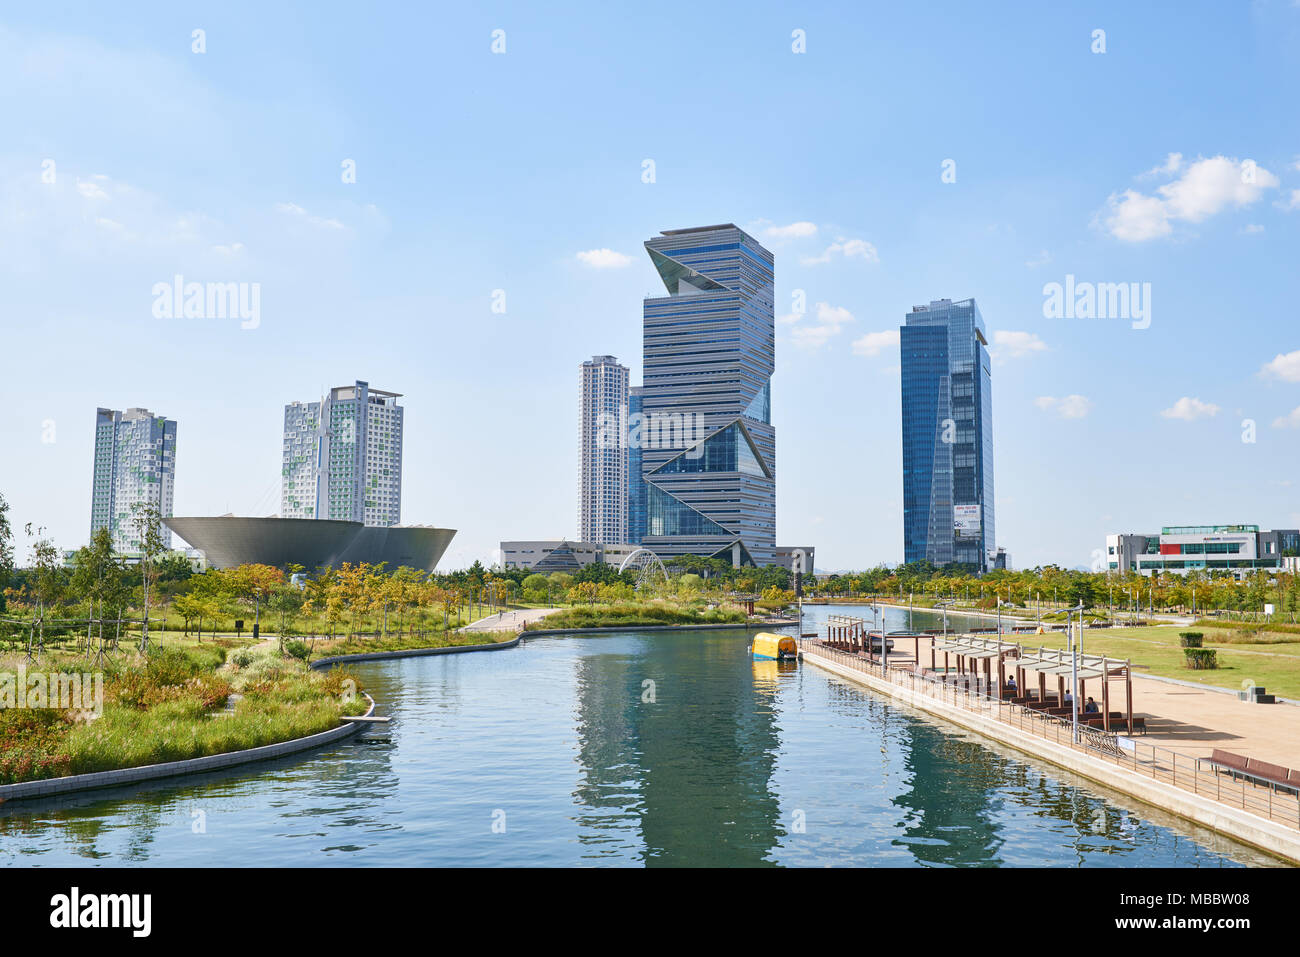 Songdo, Korea - September 07, 2015: Songdo International Business District (Songdo IBD) is a new smart city built in Incheon, South Korea. SIBD is con Stock Photo